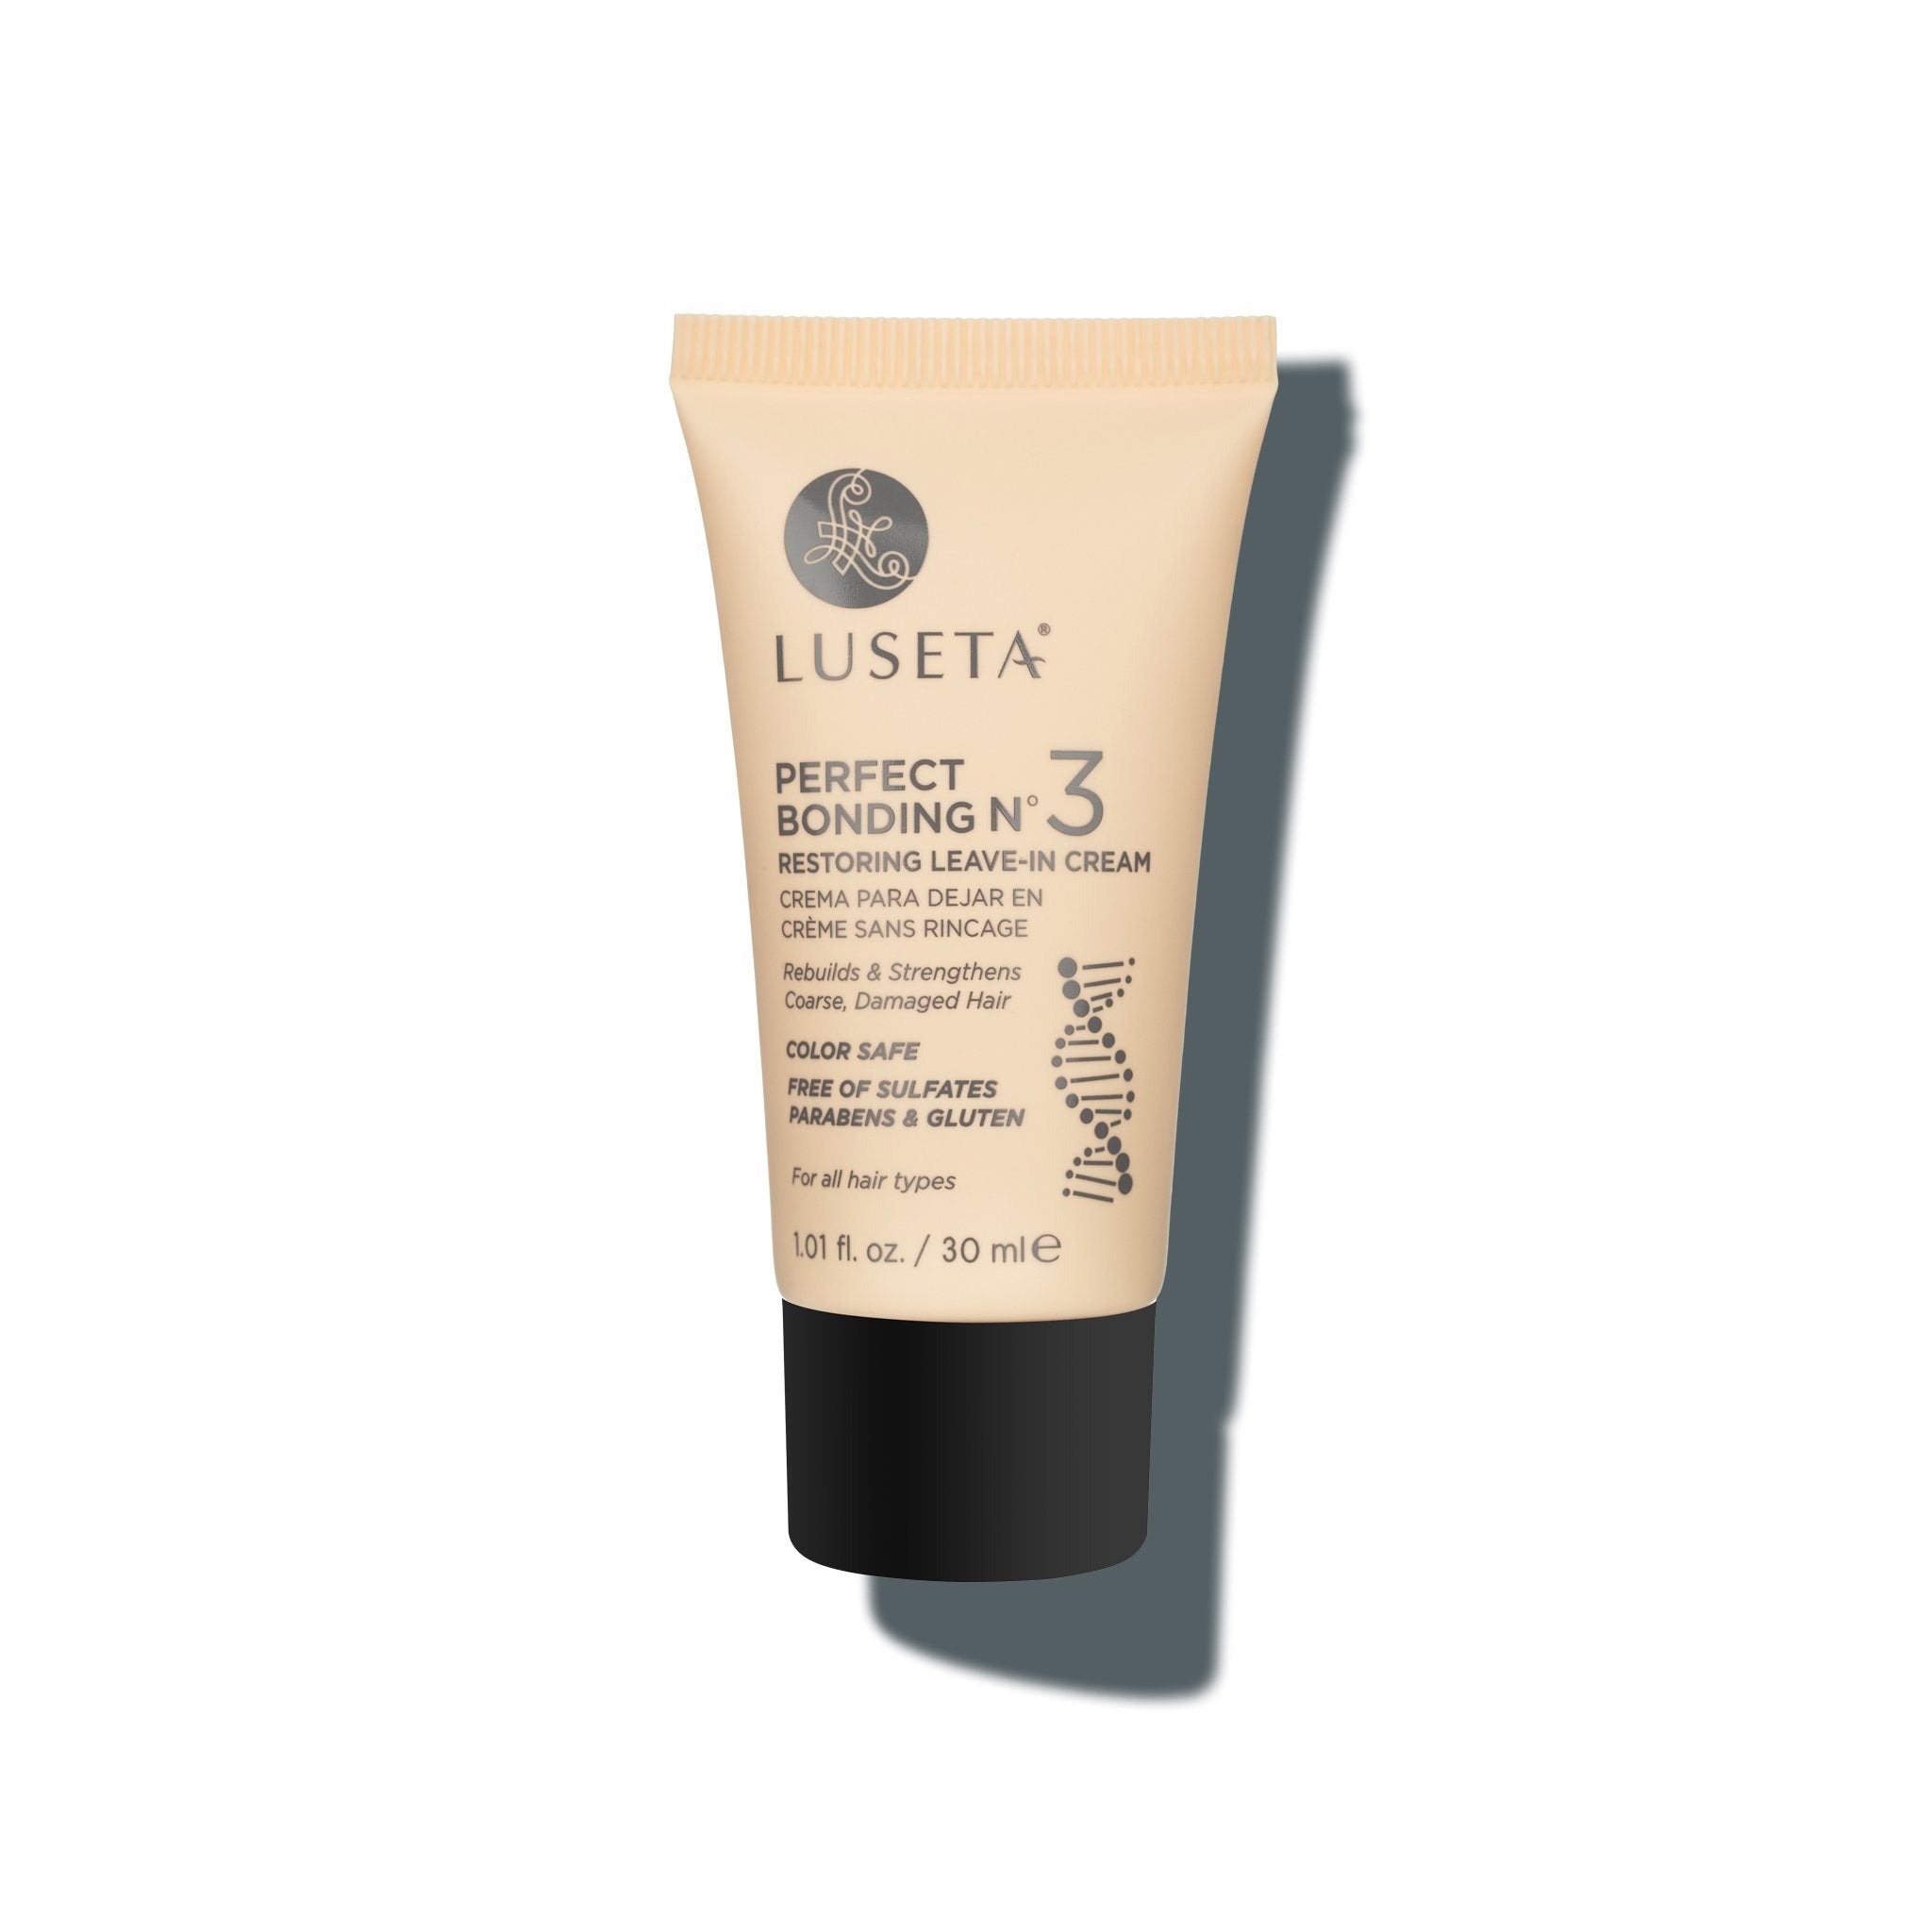 ++Perfect Bonding No.3 Restoring Leave-in Cream - Luseta Beauty++